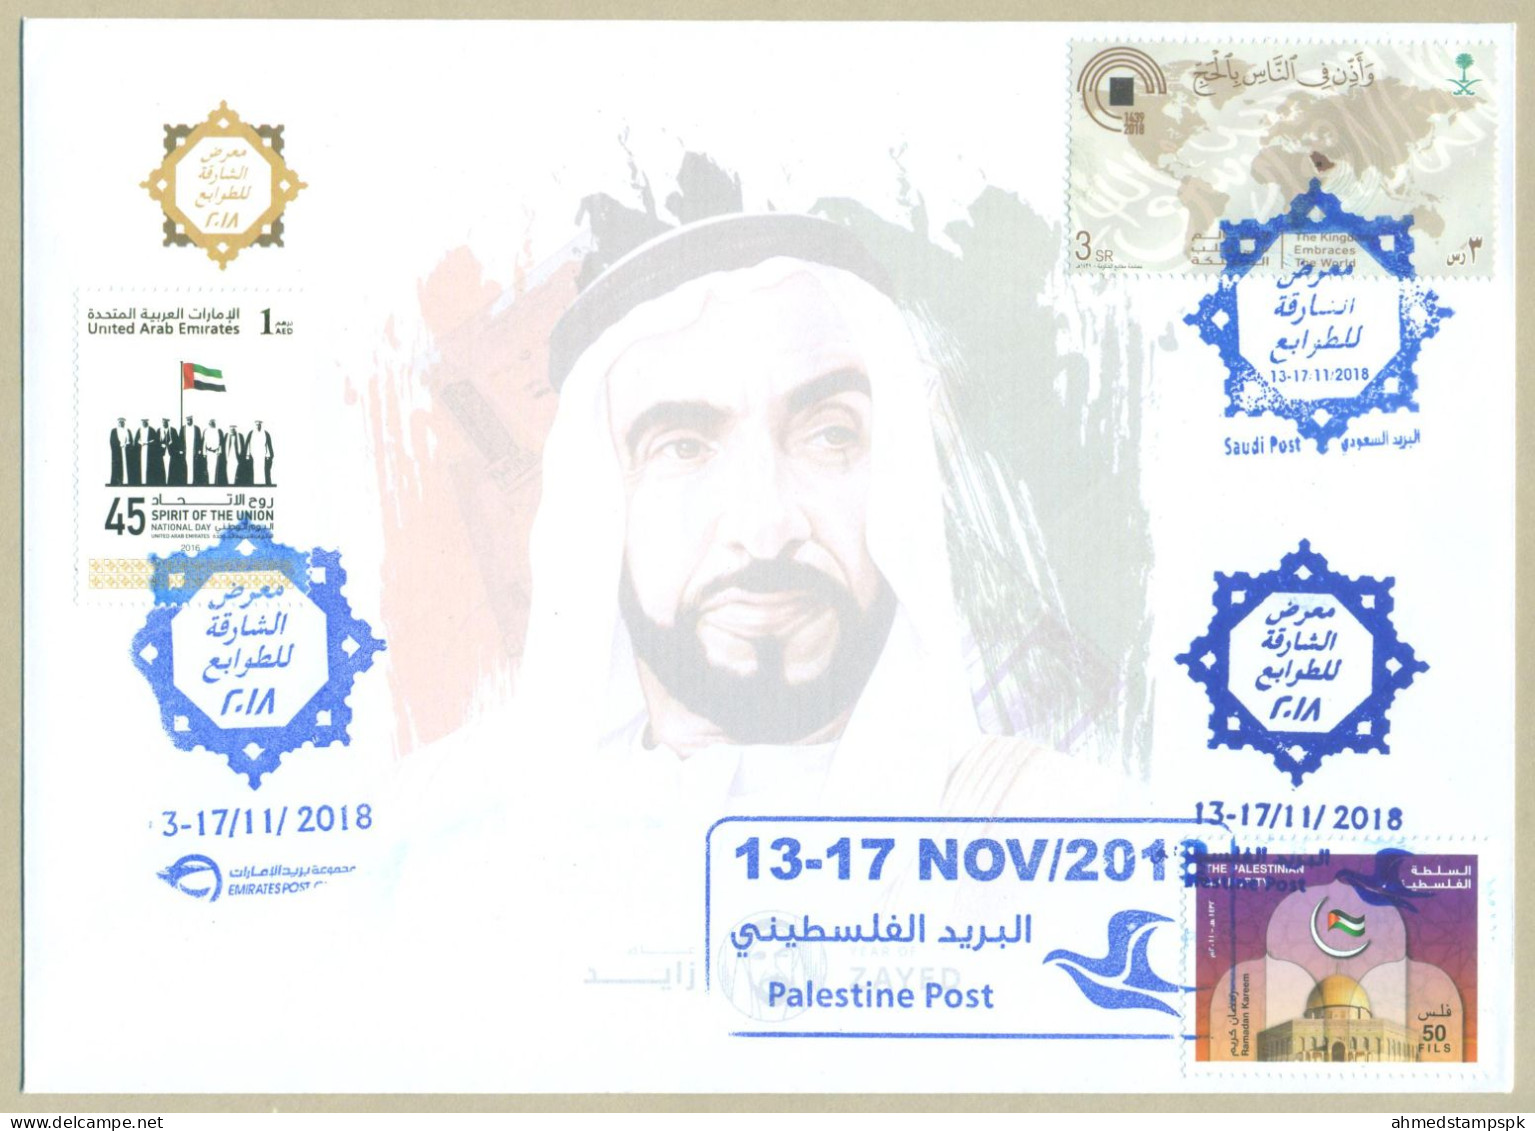 UAE UNITED ARAB EMIRATES SHARJAH EXHIBITION 13 - 17 NOV 2018 HAJJ SAUDI ARABIA PALESTINE NATIONAL DAY - Emirats Arabes Unis (Général)